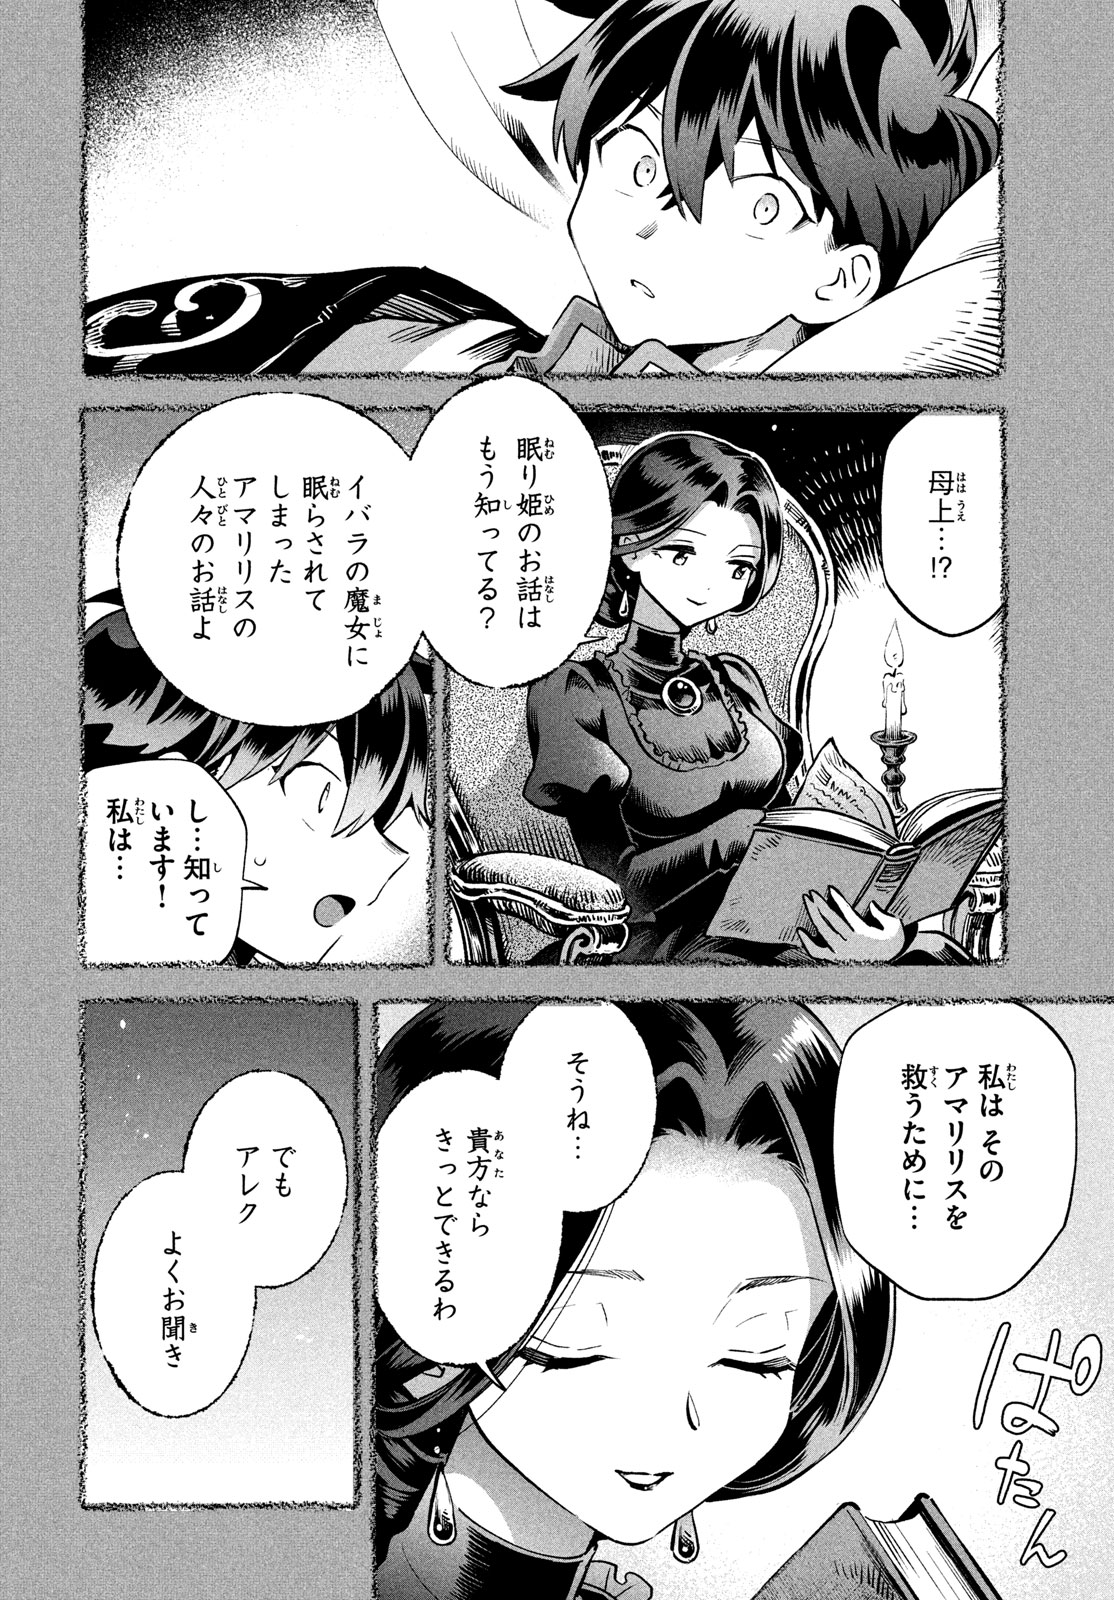 7-nin no Nemuri Hime - Chapter 48 - Page 8